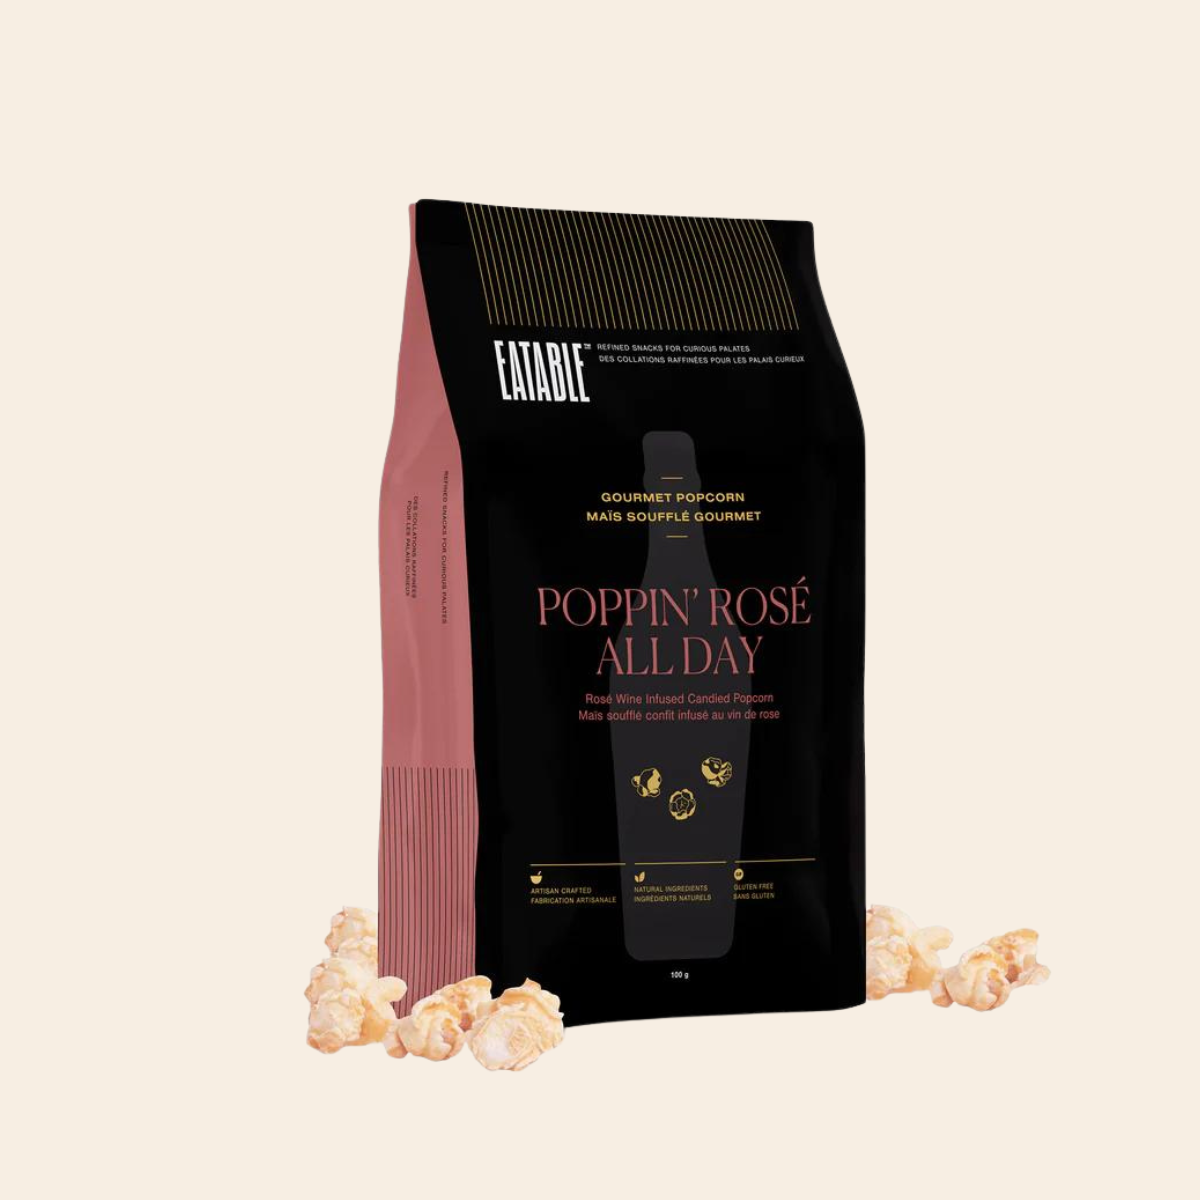 EATABLE Popcorn - Infused Popcorn